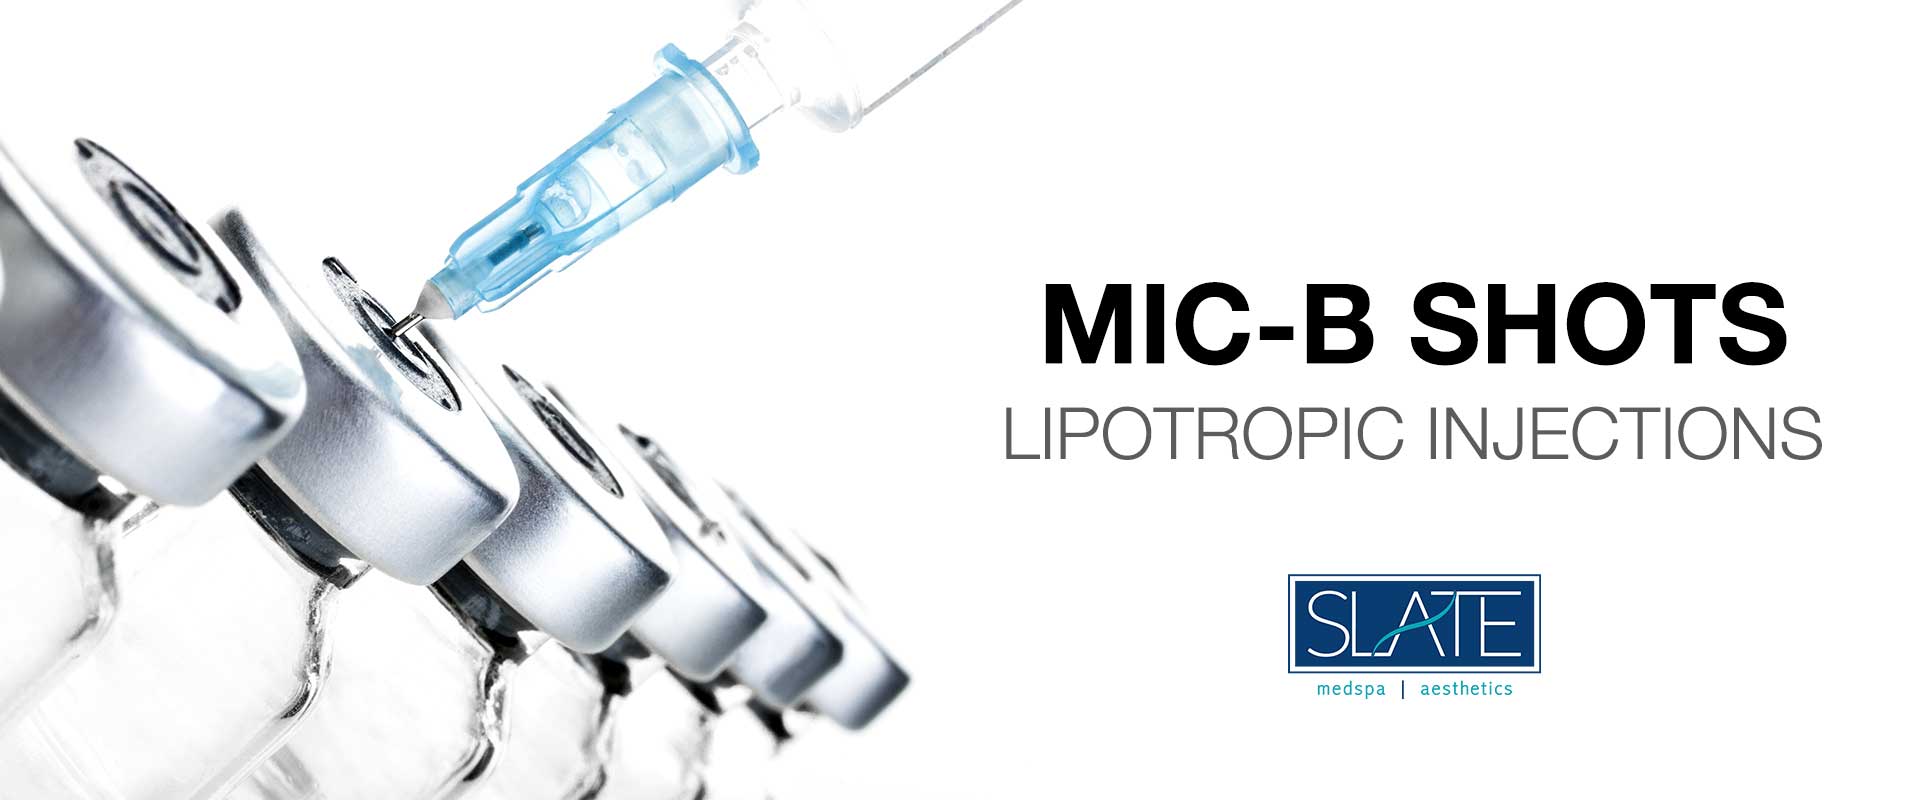 mic-b-shots-lipotropic-injections